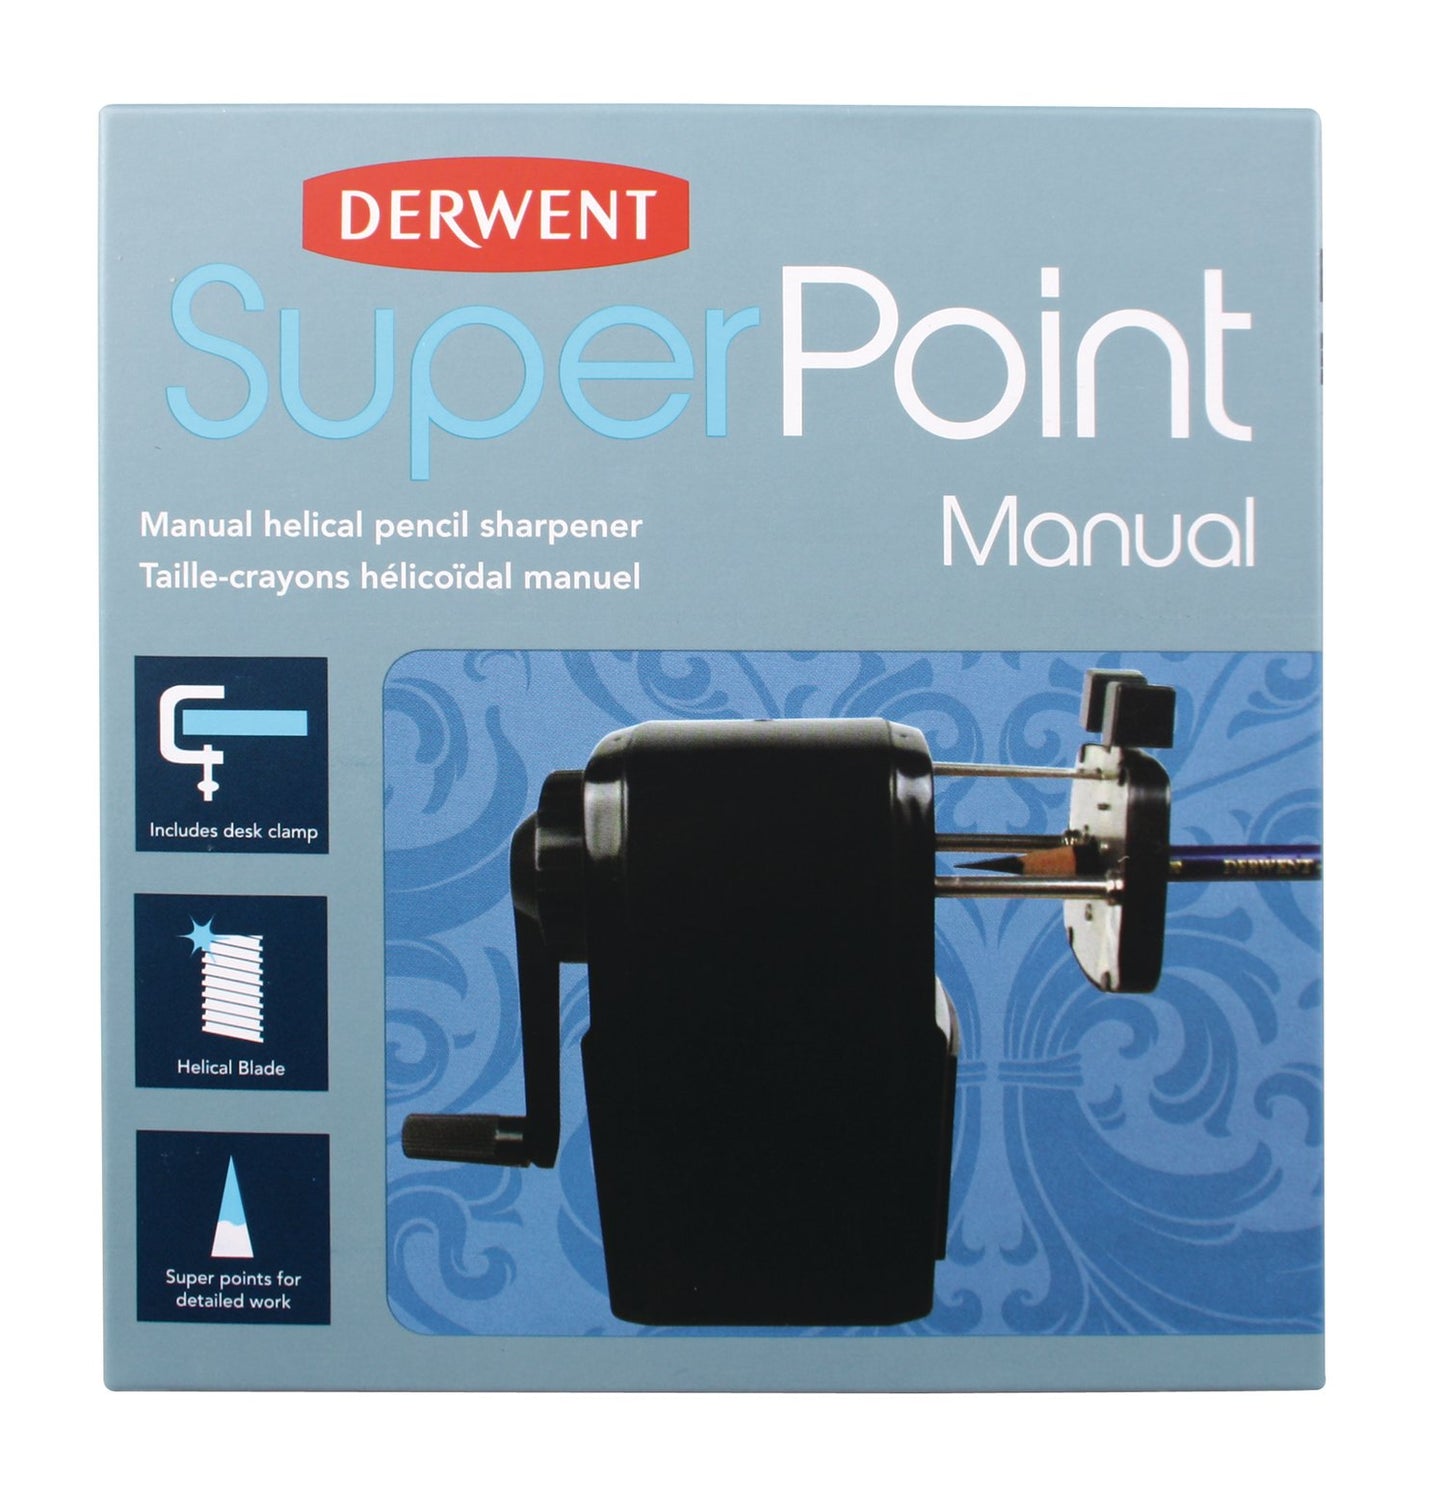 Derwent Super Point Manual Desk Sharpener